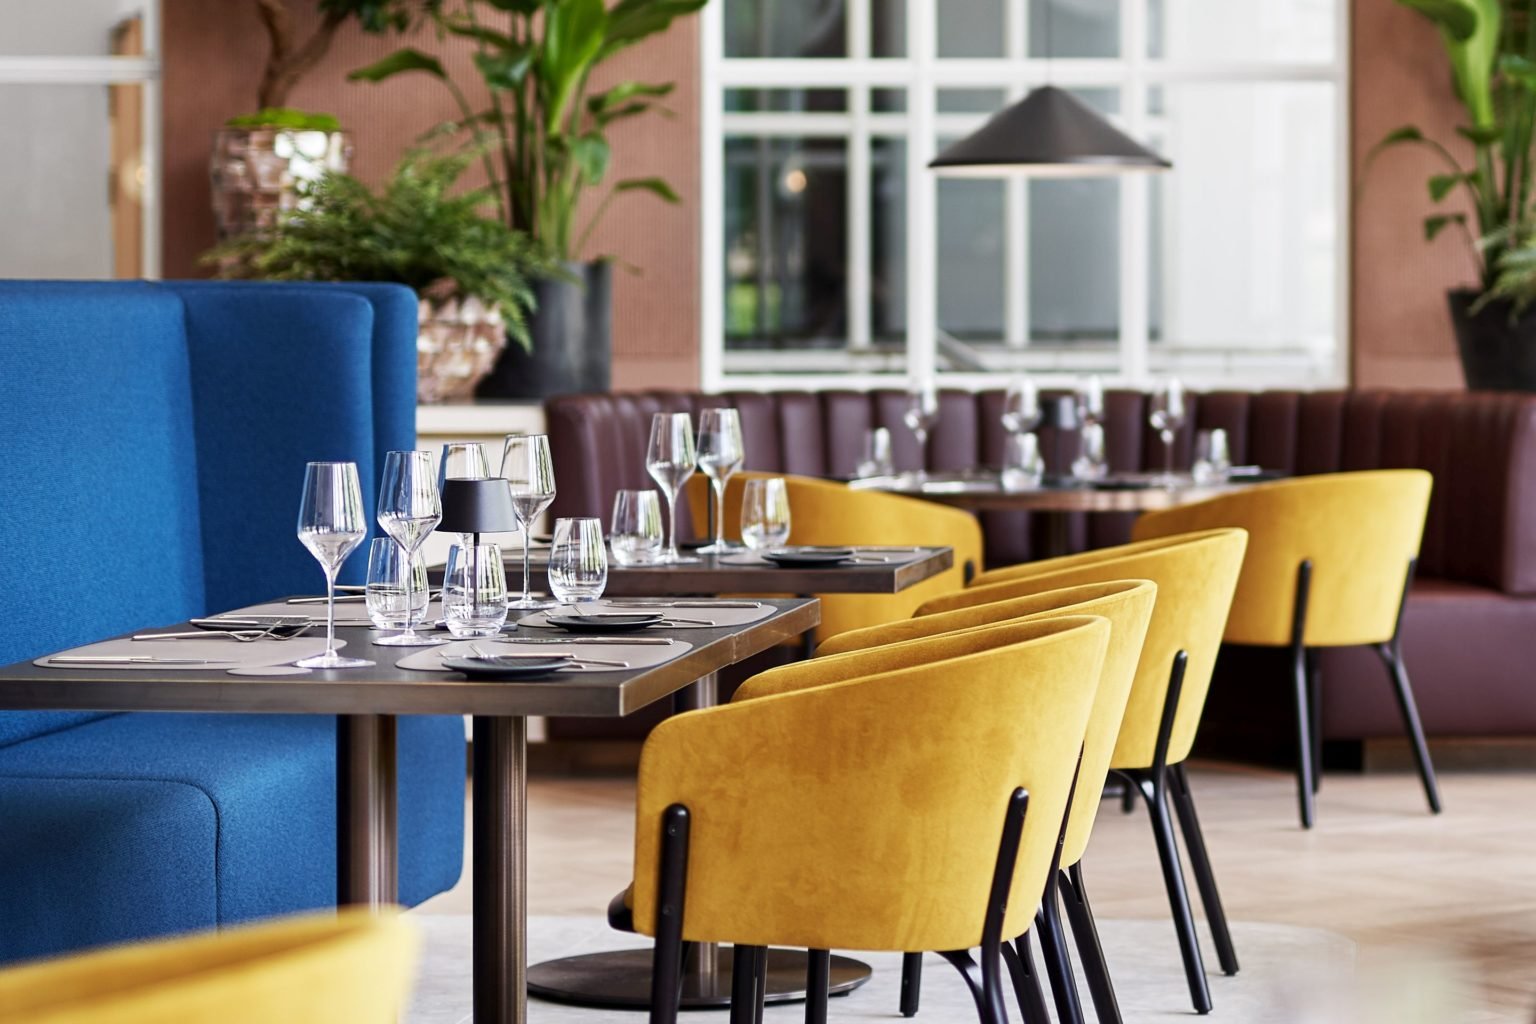 Danza Restaurant and Bar, Germany - Restaurant Interior Design on Love ...